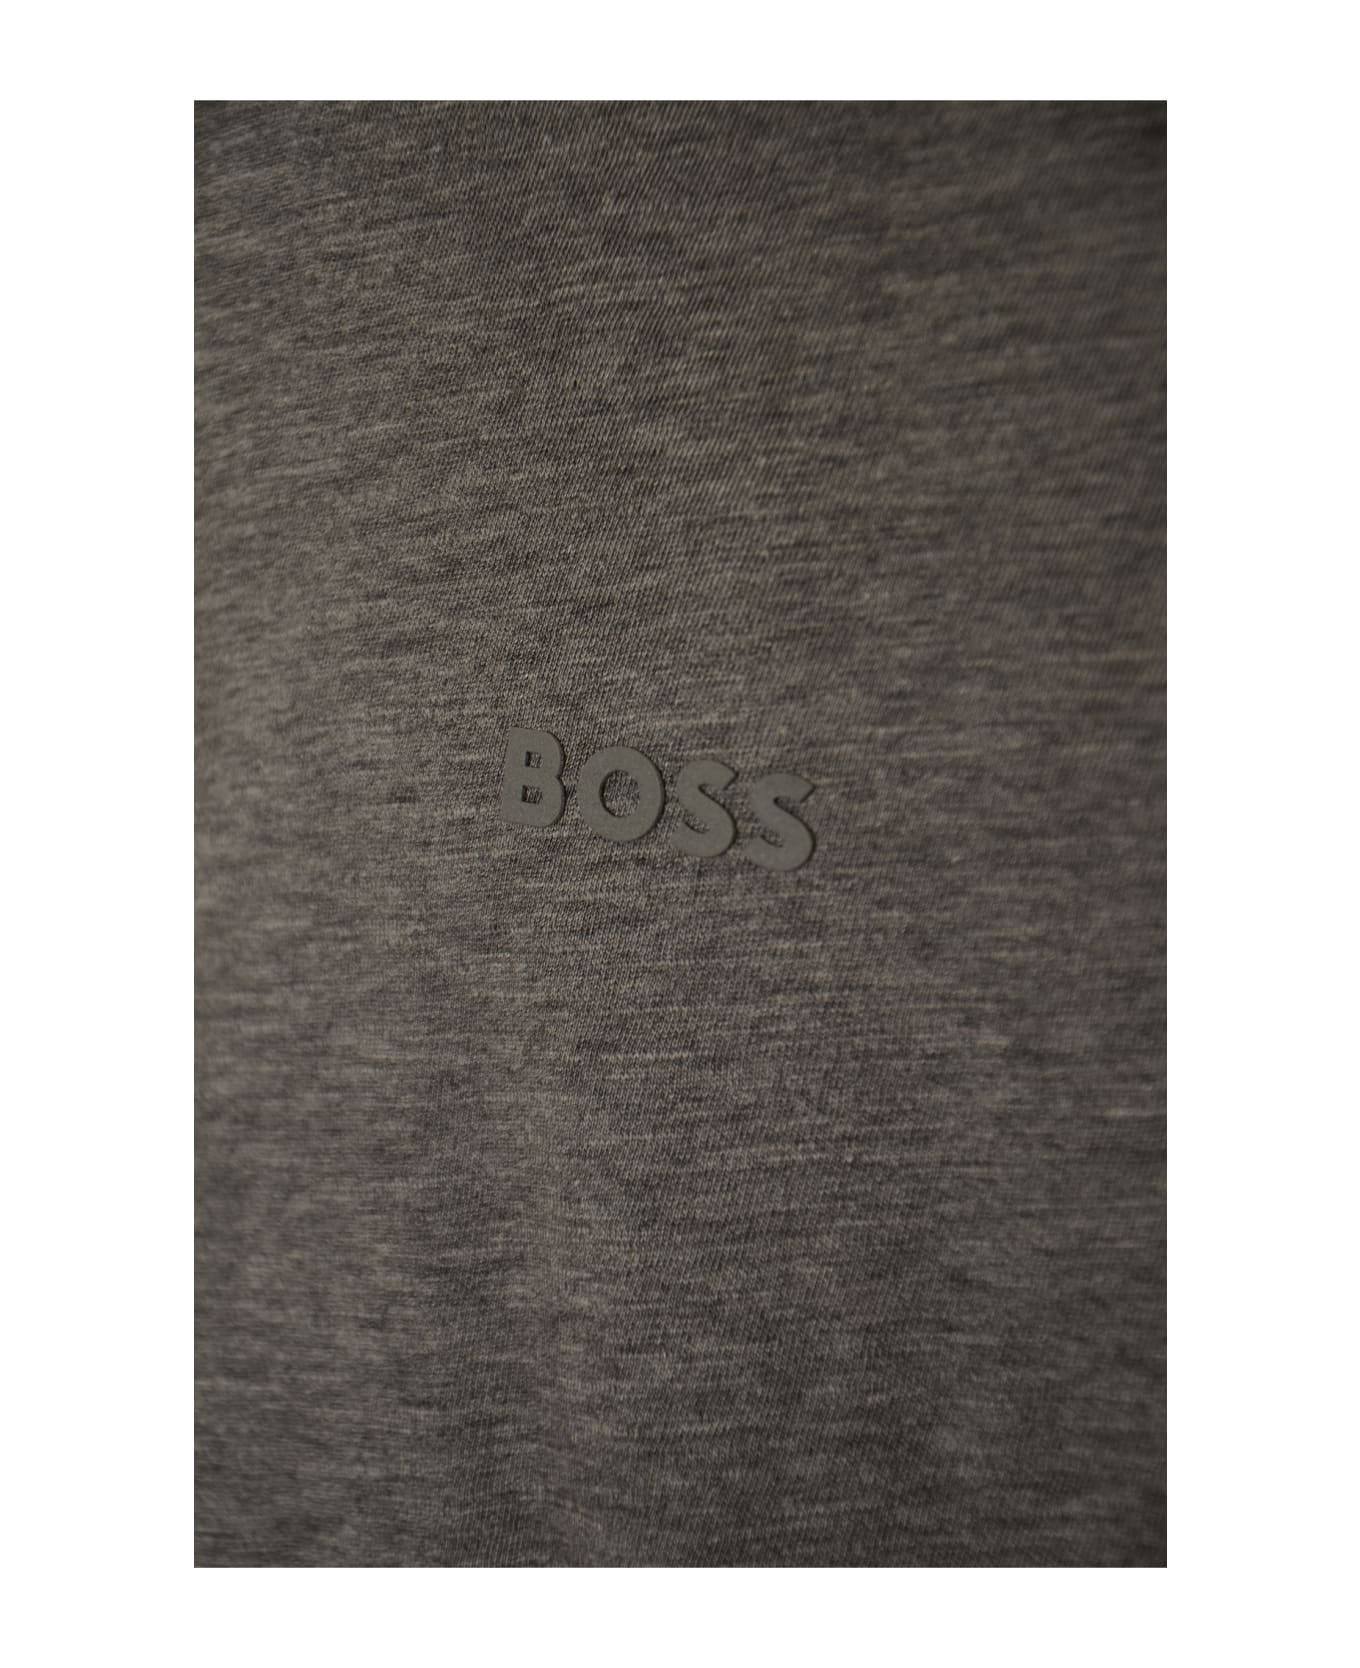 Hugo Boss Round Neck Classic T-shirt - Light Pastel Grey シャツ